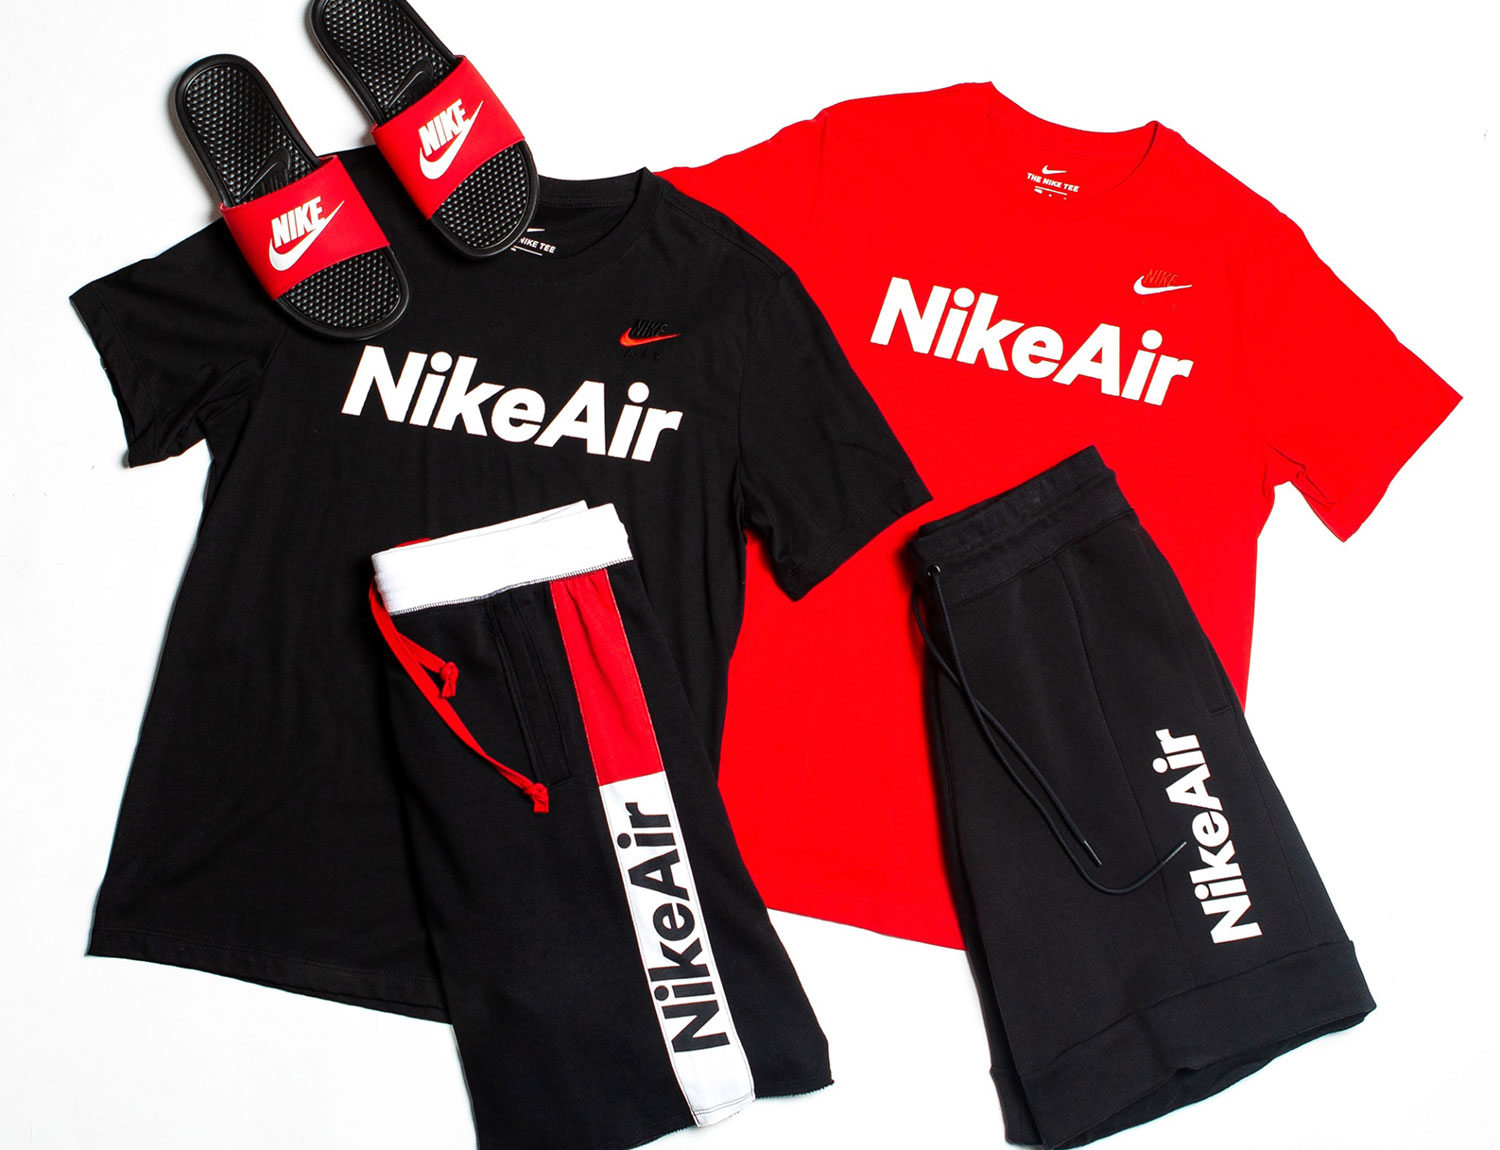 nike-air-black-red-white-apparel